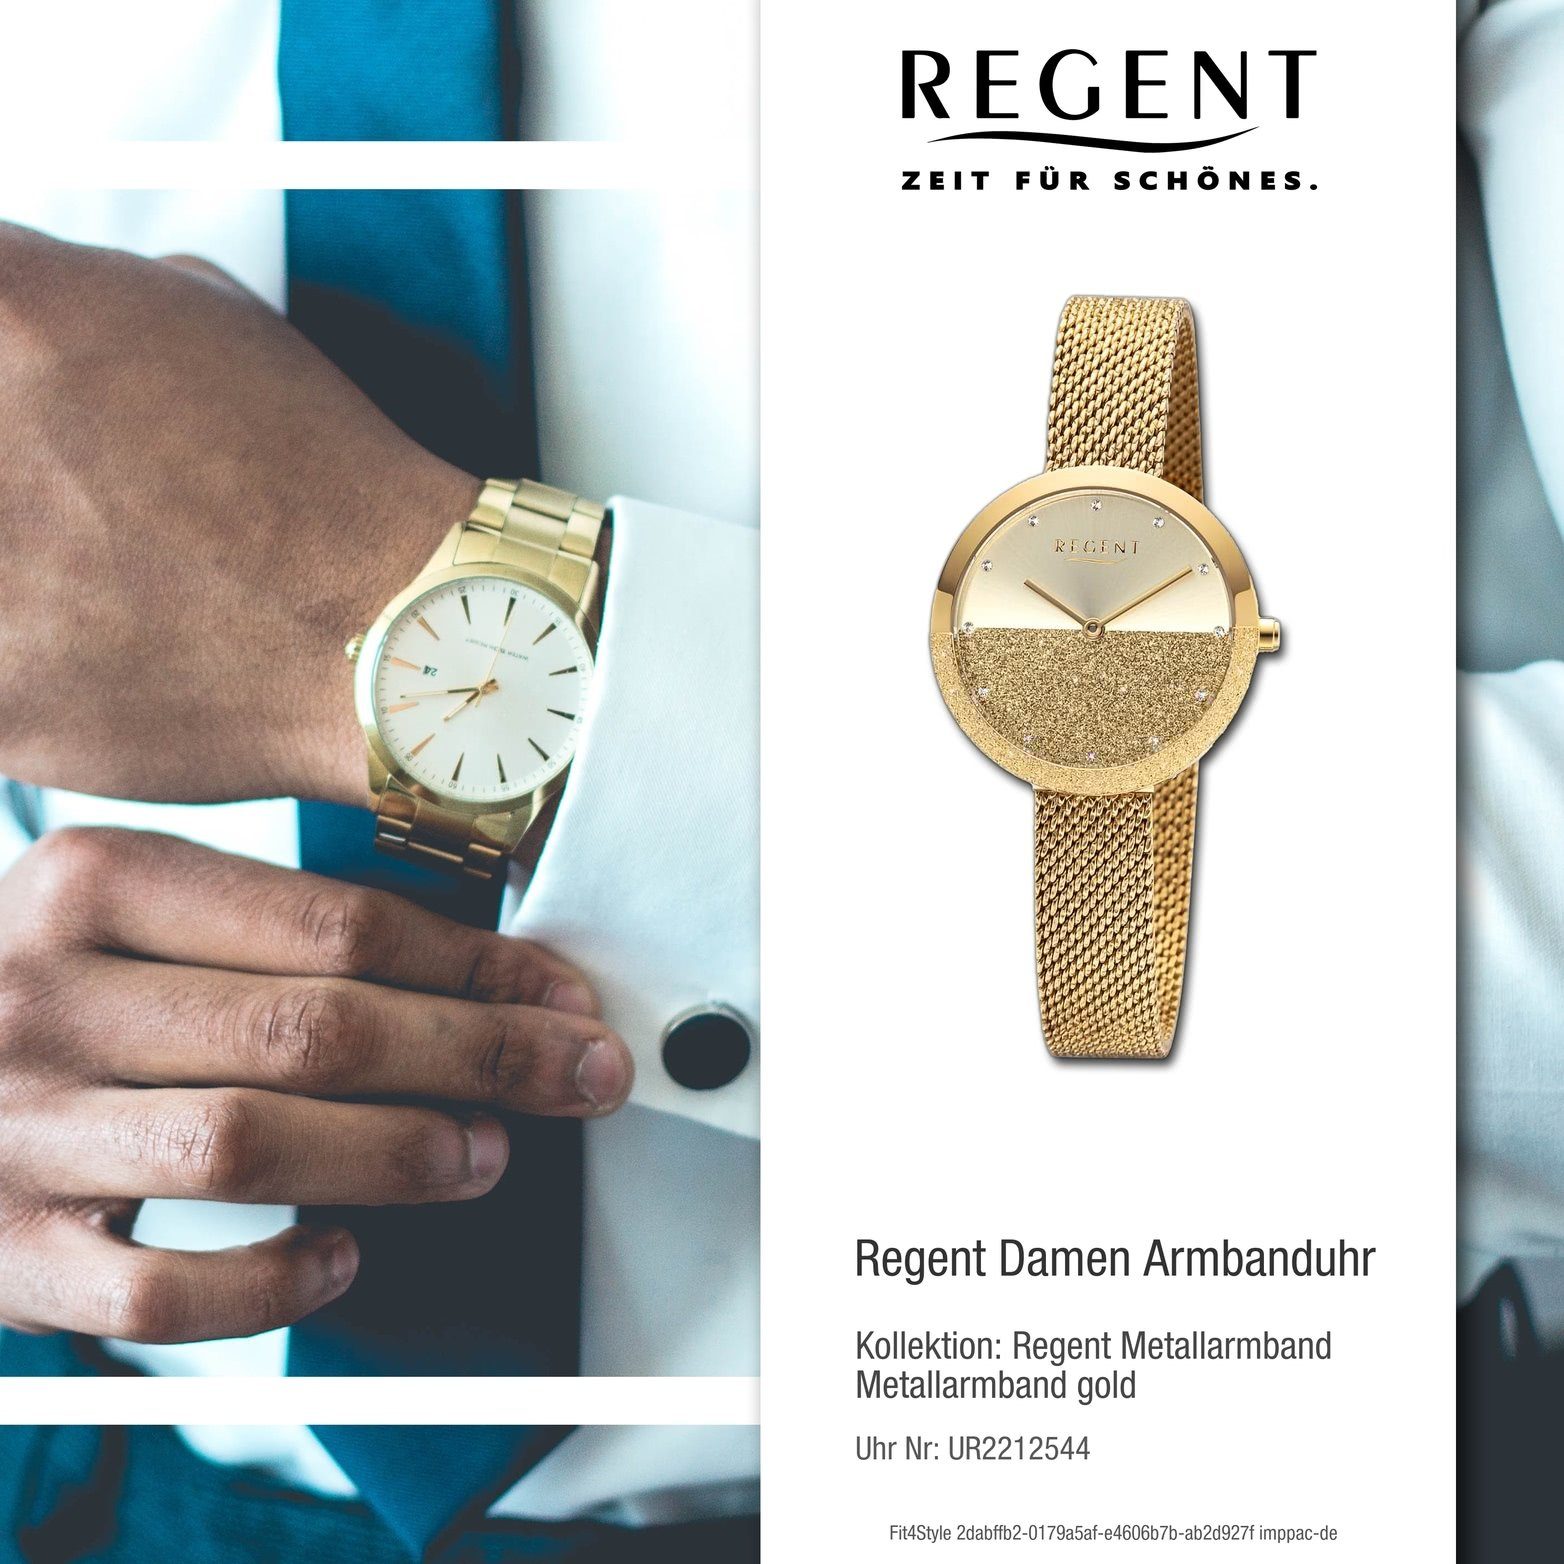 Metallarmband Quarzuhr Analog, gold, extra (ca. Damen groß rundes Gehäuse, Regent Regent 32mm) Armbanduhr Damenuhr